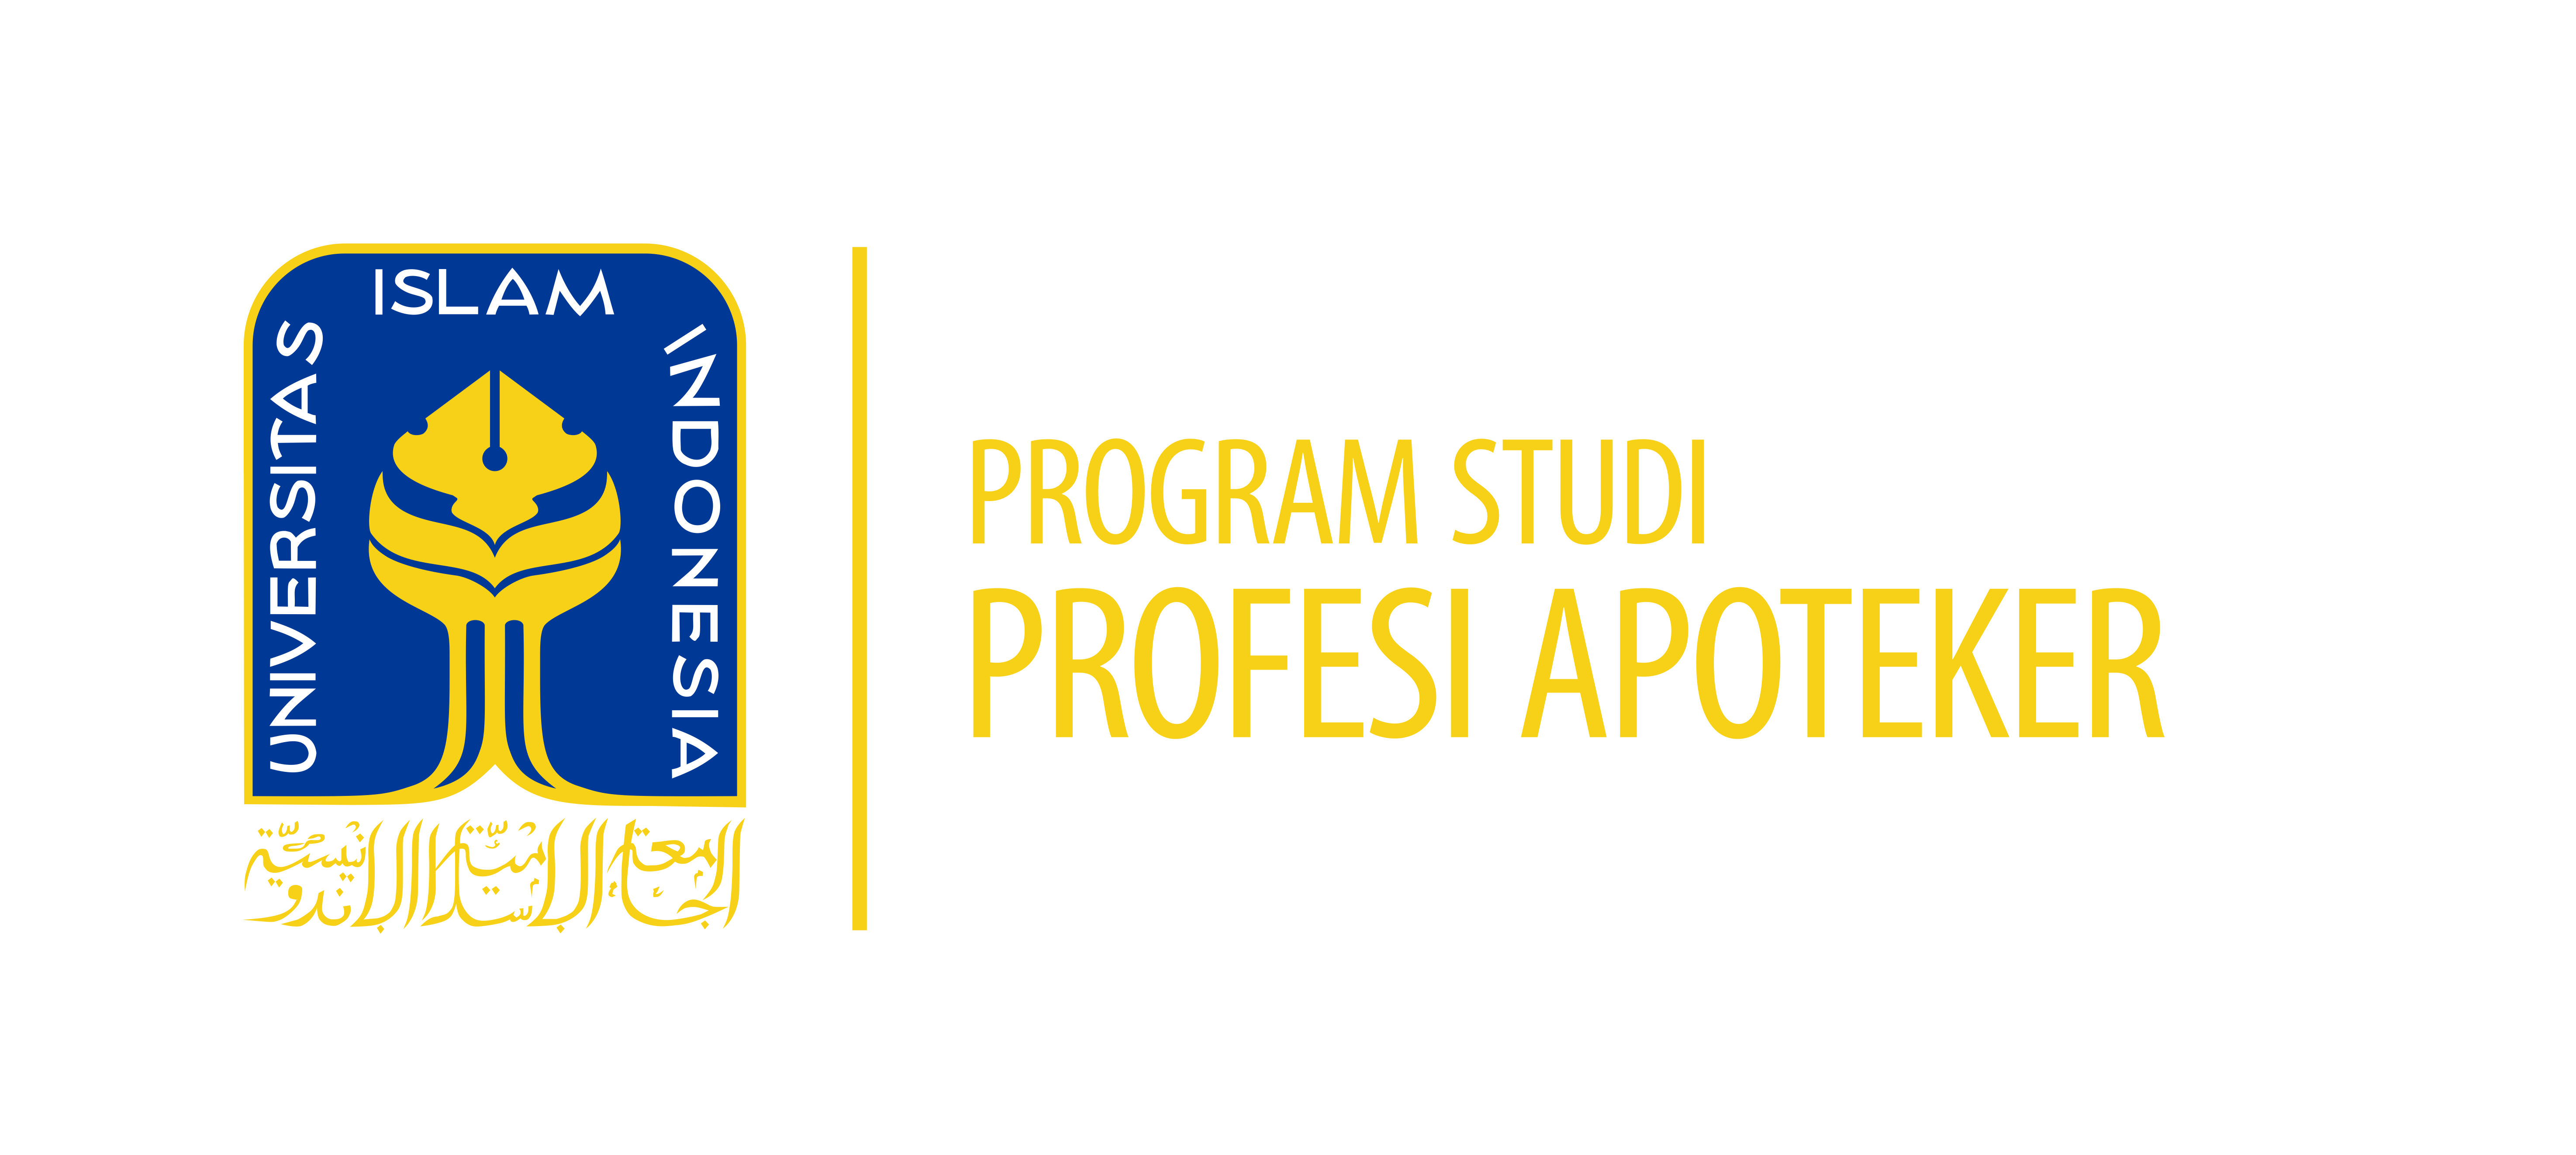 Program Studi Profesi Apoteker FMIPA UII